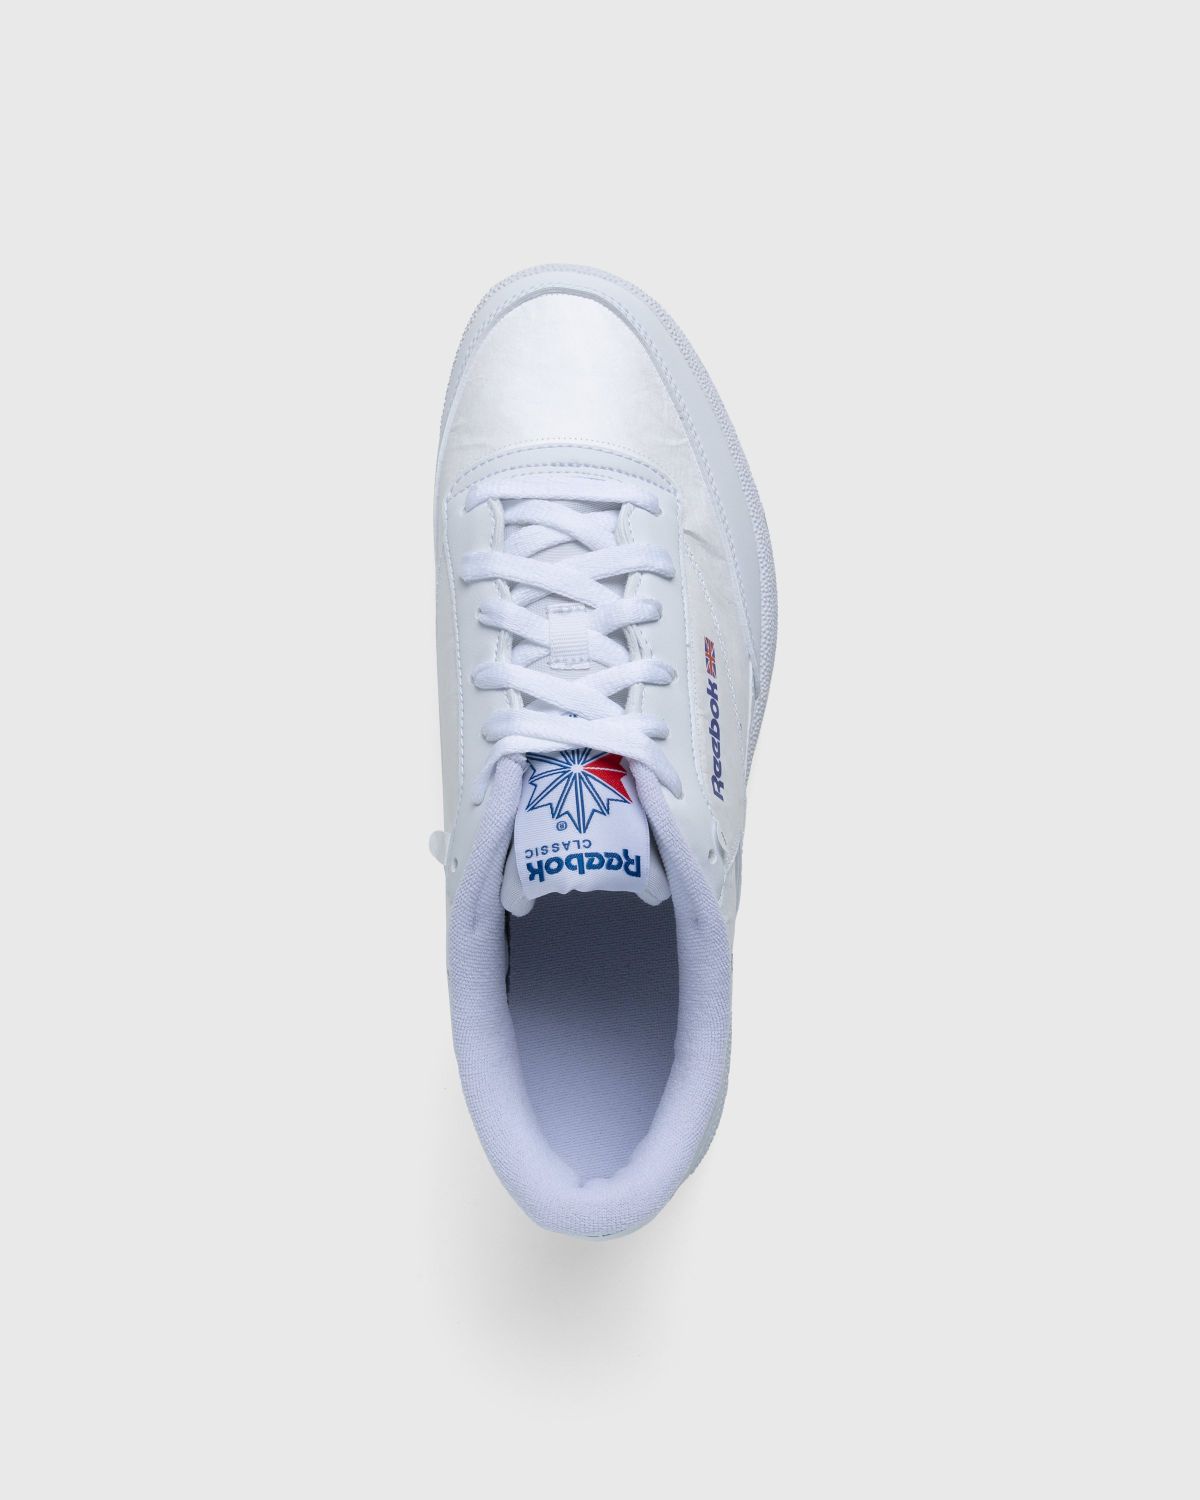 Reebok – Club C 85 x U White - Low Top Sneakers - White - Image 5